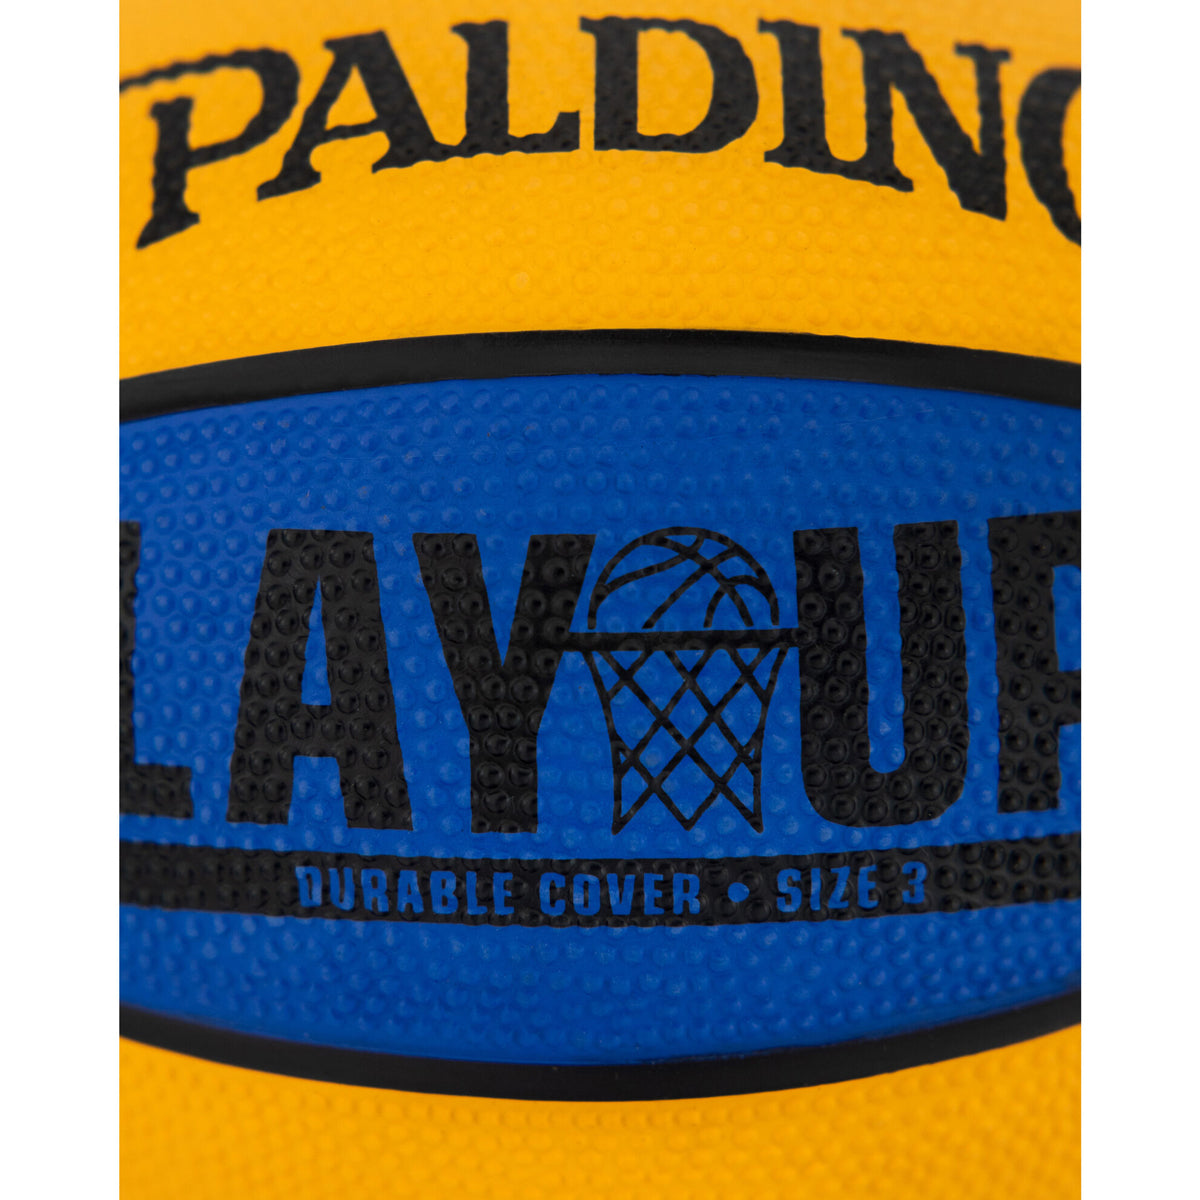 Spalding Layup Mini Rubber Outdoor Basketball Spalding